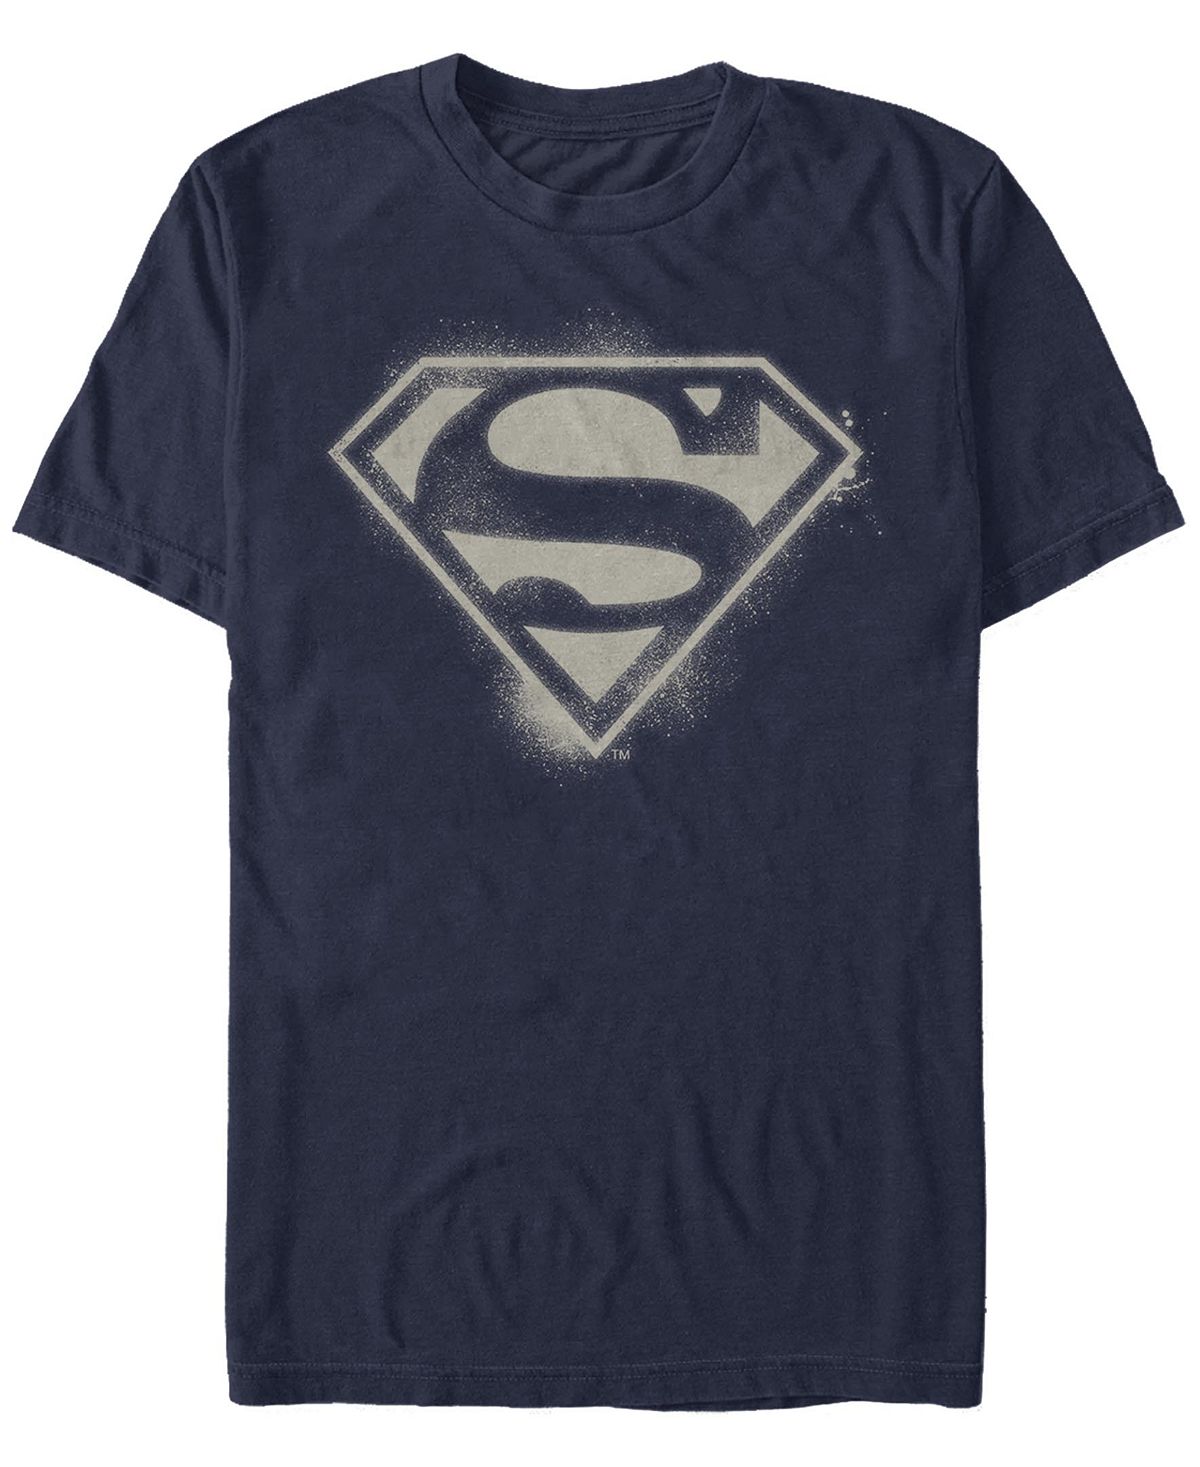 Мужская футболка с коротким рукавом и логотипом superman spray logo Fifth Sun, синий